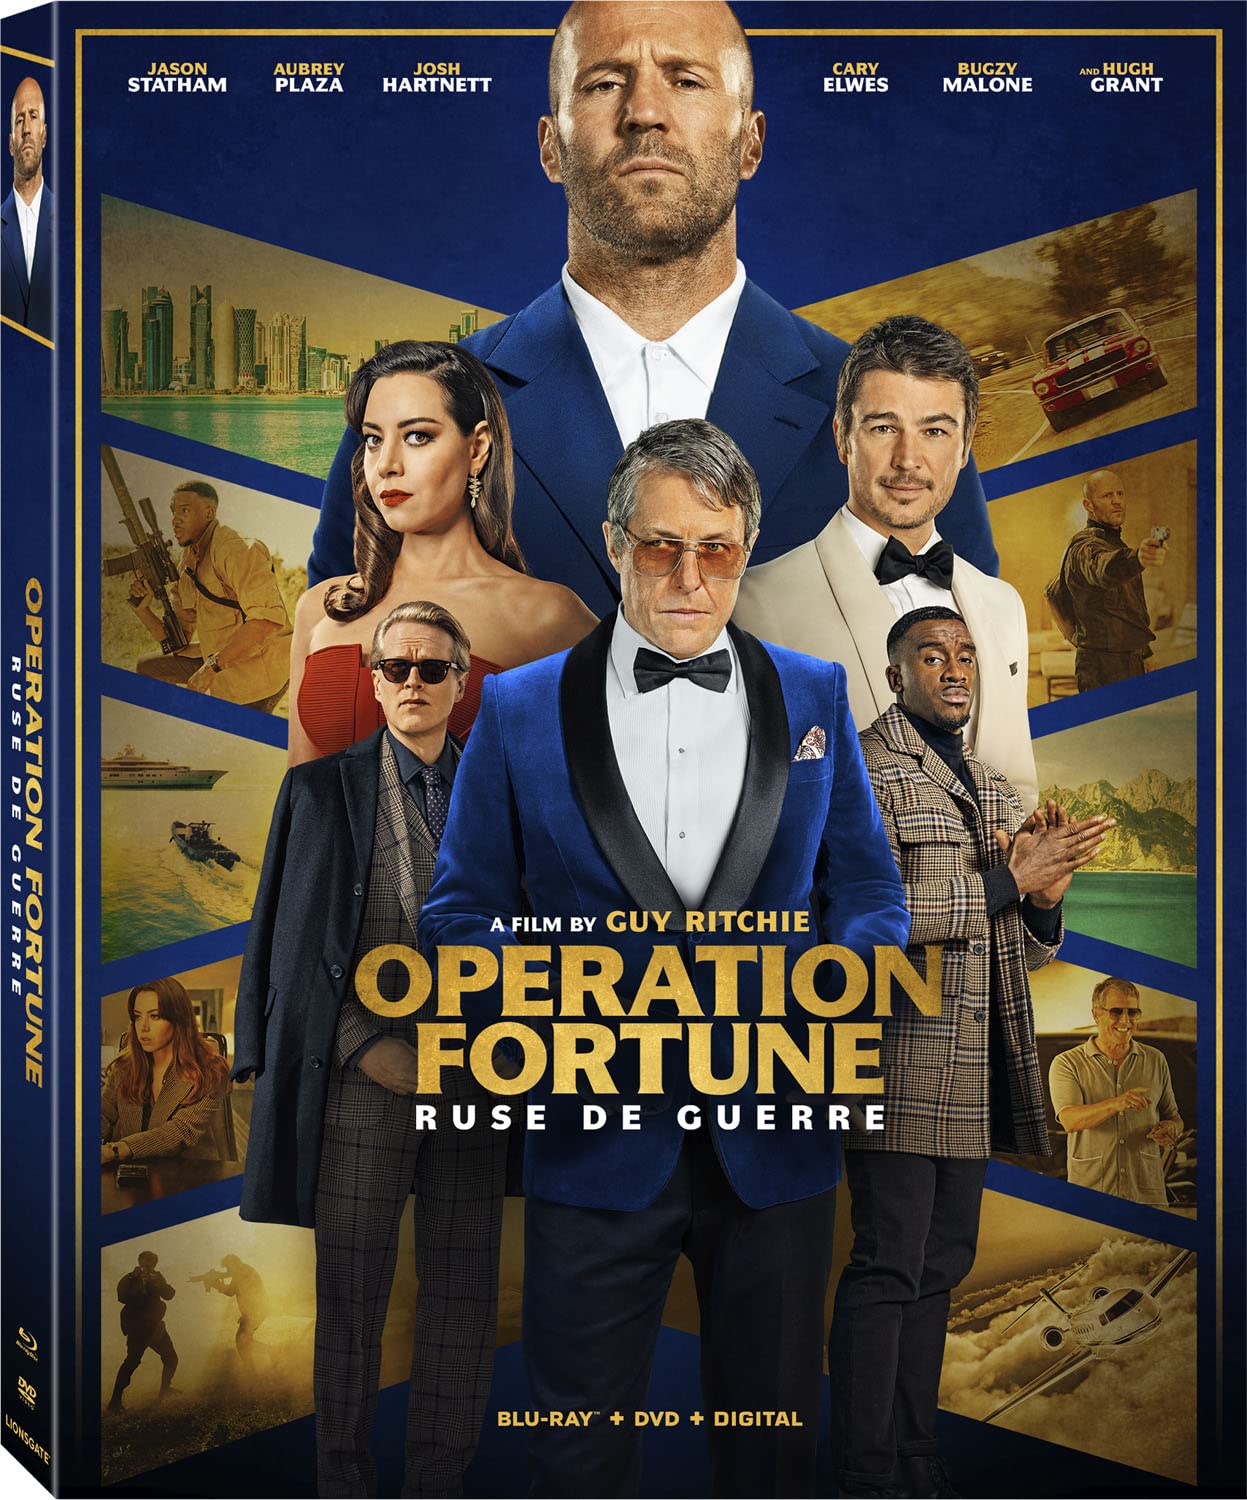 Operation Fortune: Ruse de Guerre Blu-ray/DVD/Digital Combo Edition